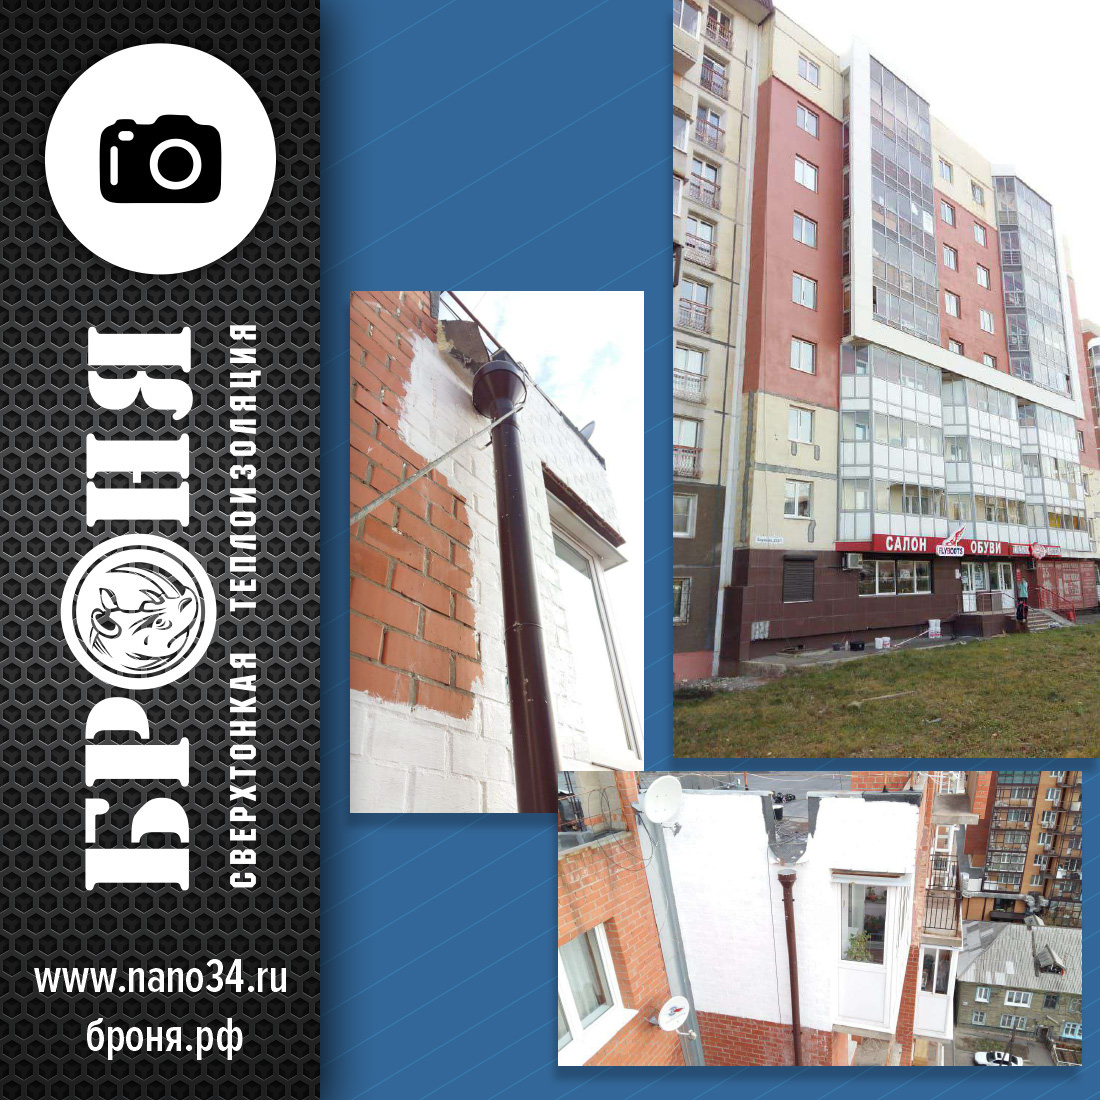 Application of Aquablock to elimination of leakage of the front wall, Irkutsk (photo).